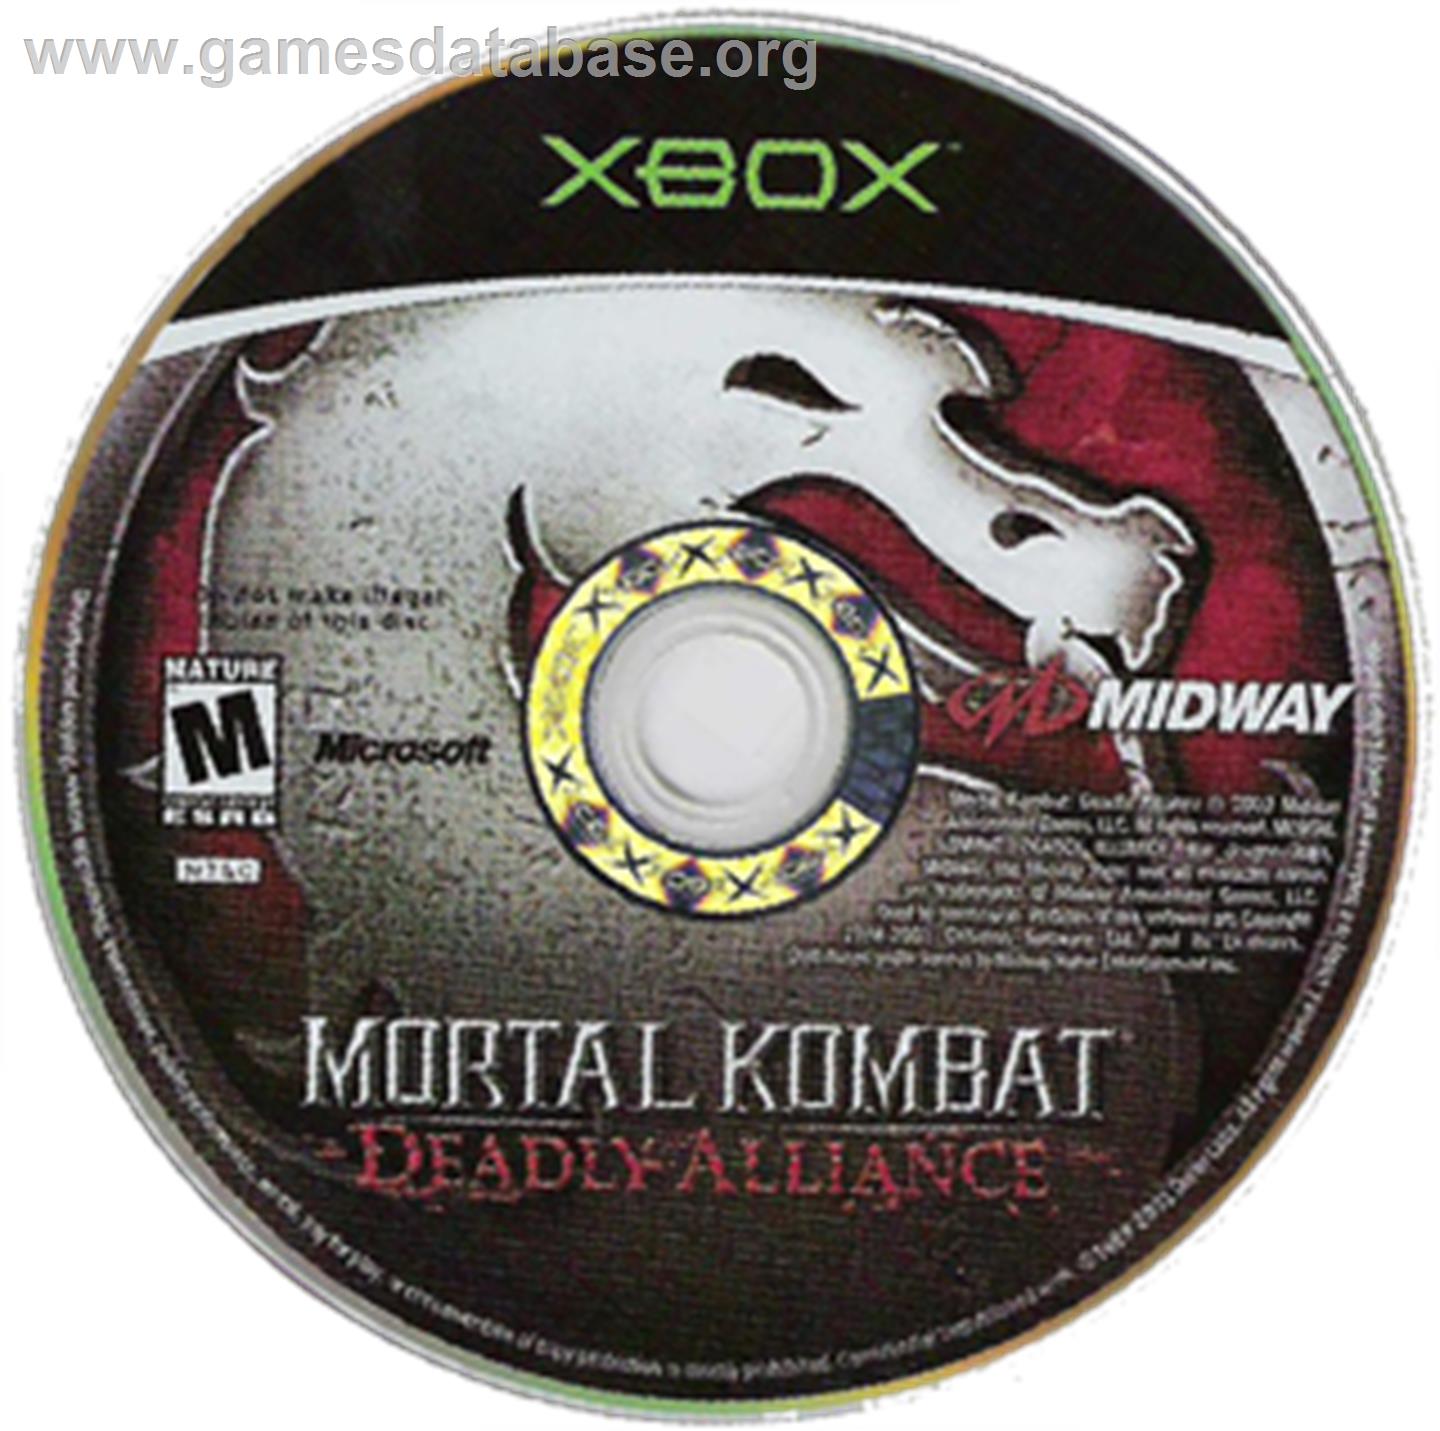 Mortal Kombat: Deadly Alliance - Microsoft Xbox - Artwork - CD